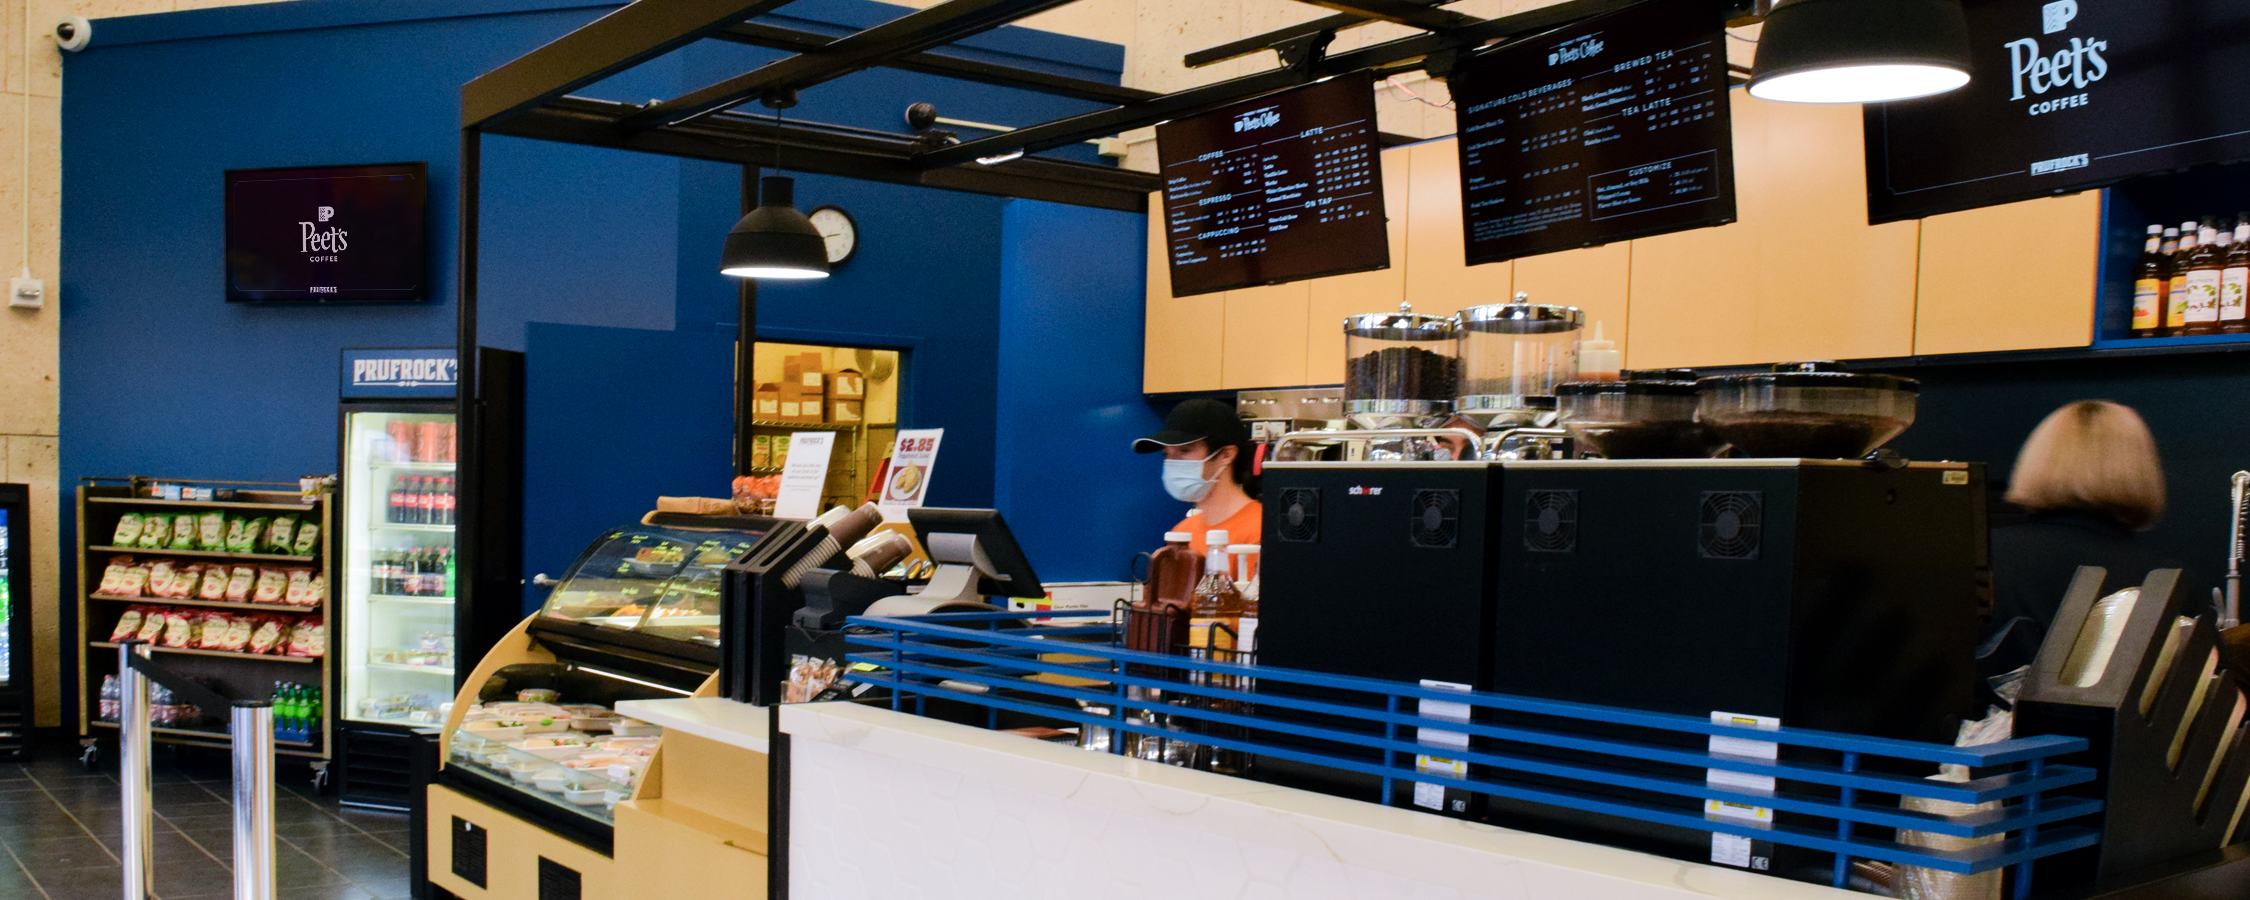 Bevo Pay FAQs - coffee shop